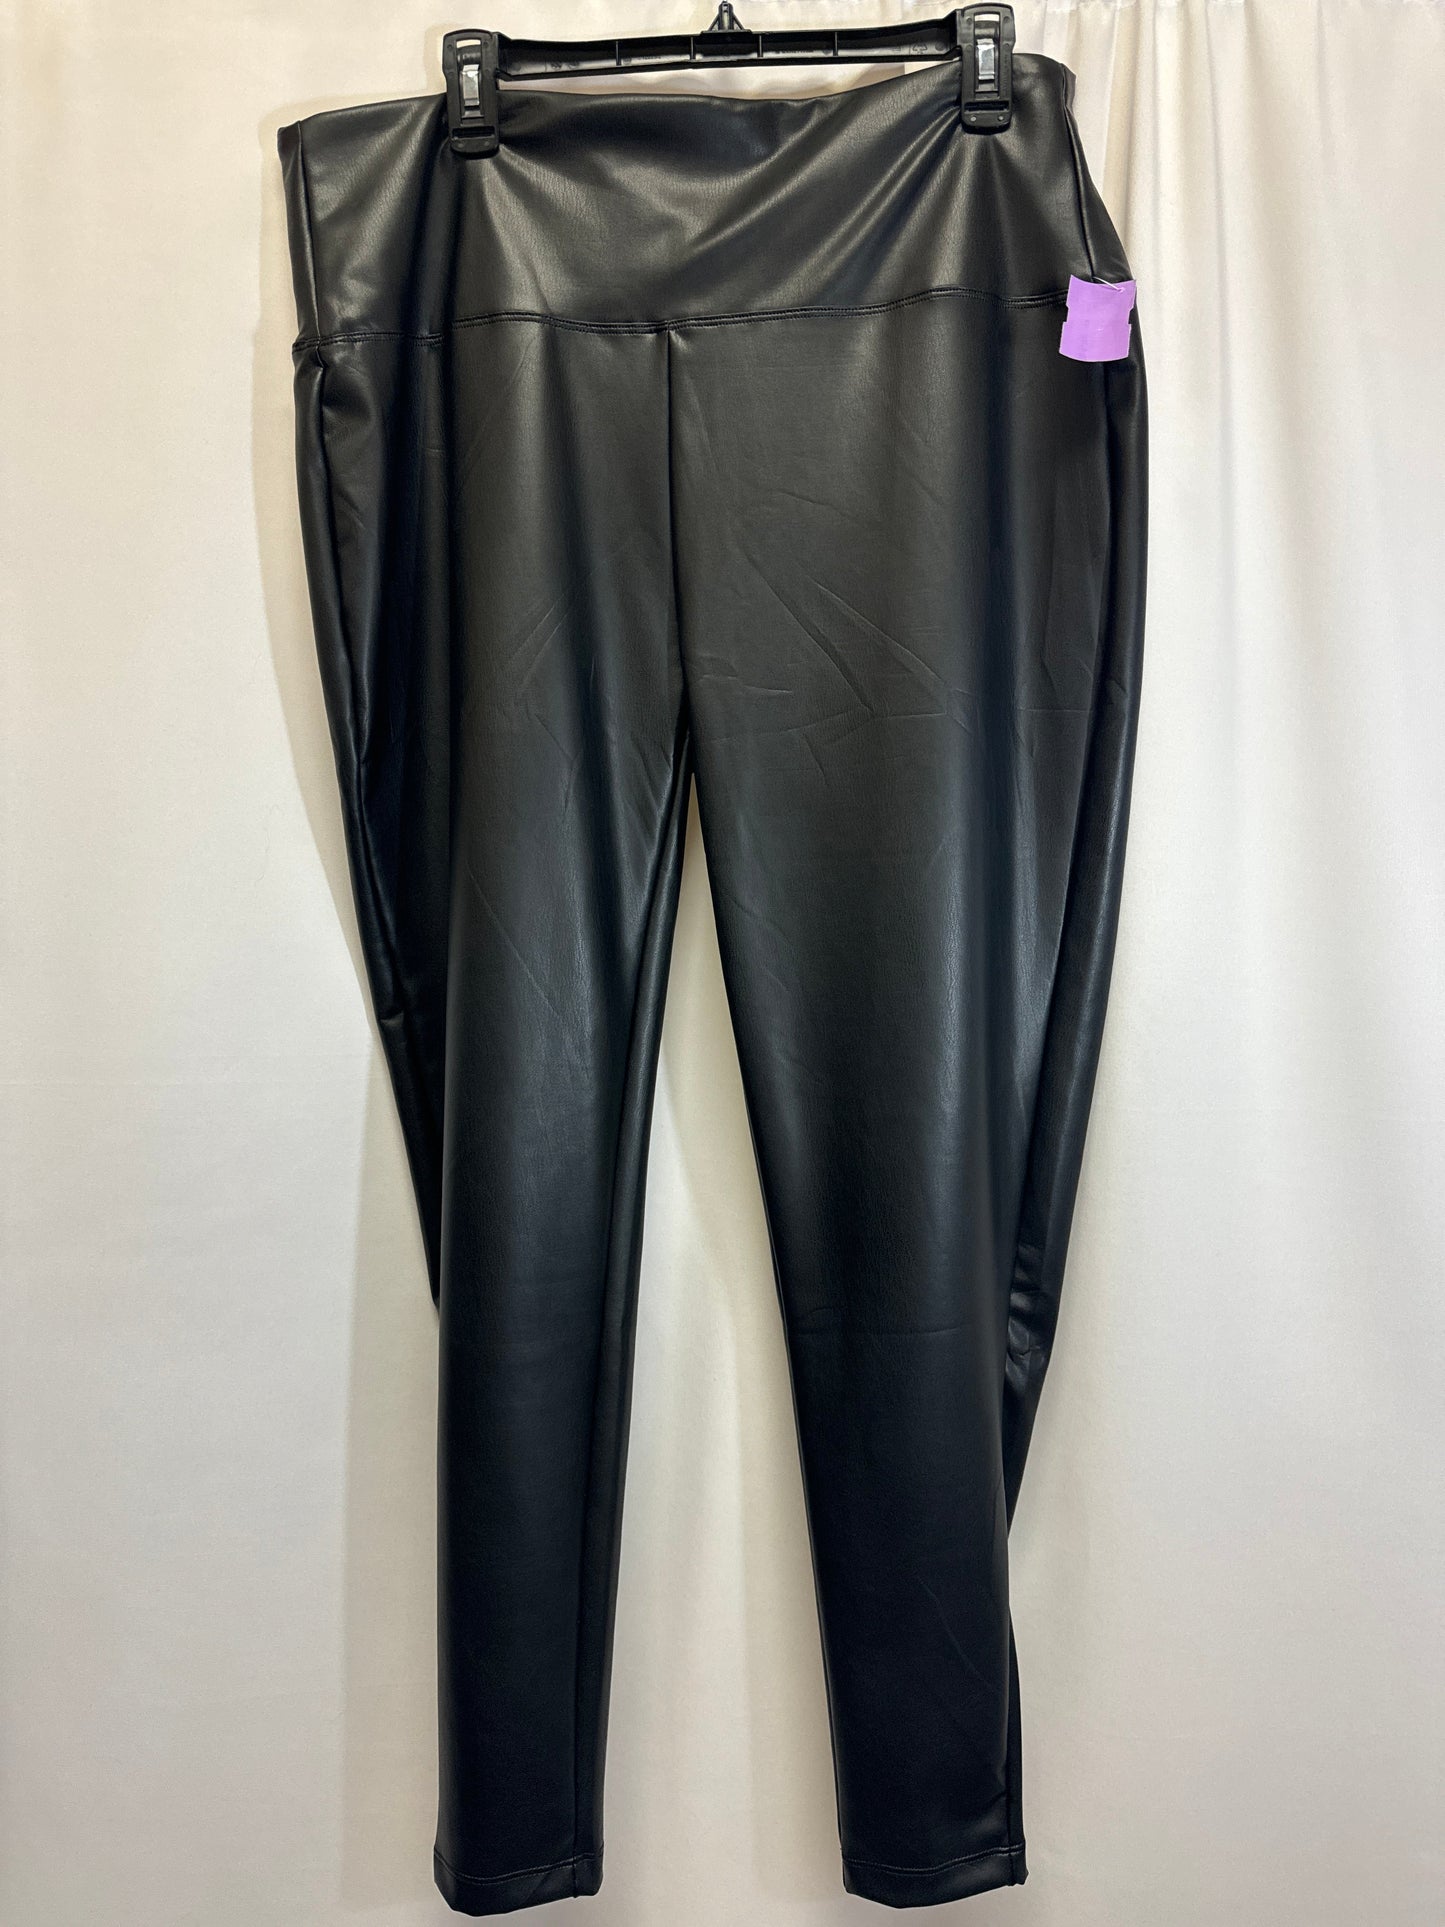 Black Pants Leggings Zenana Outfitters, Size 3x